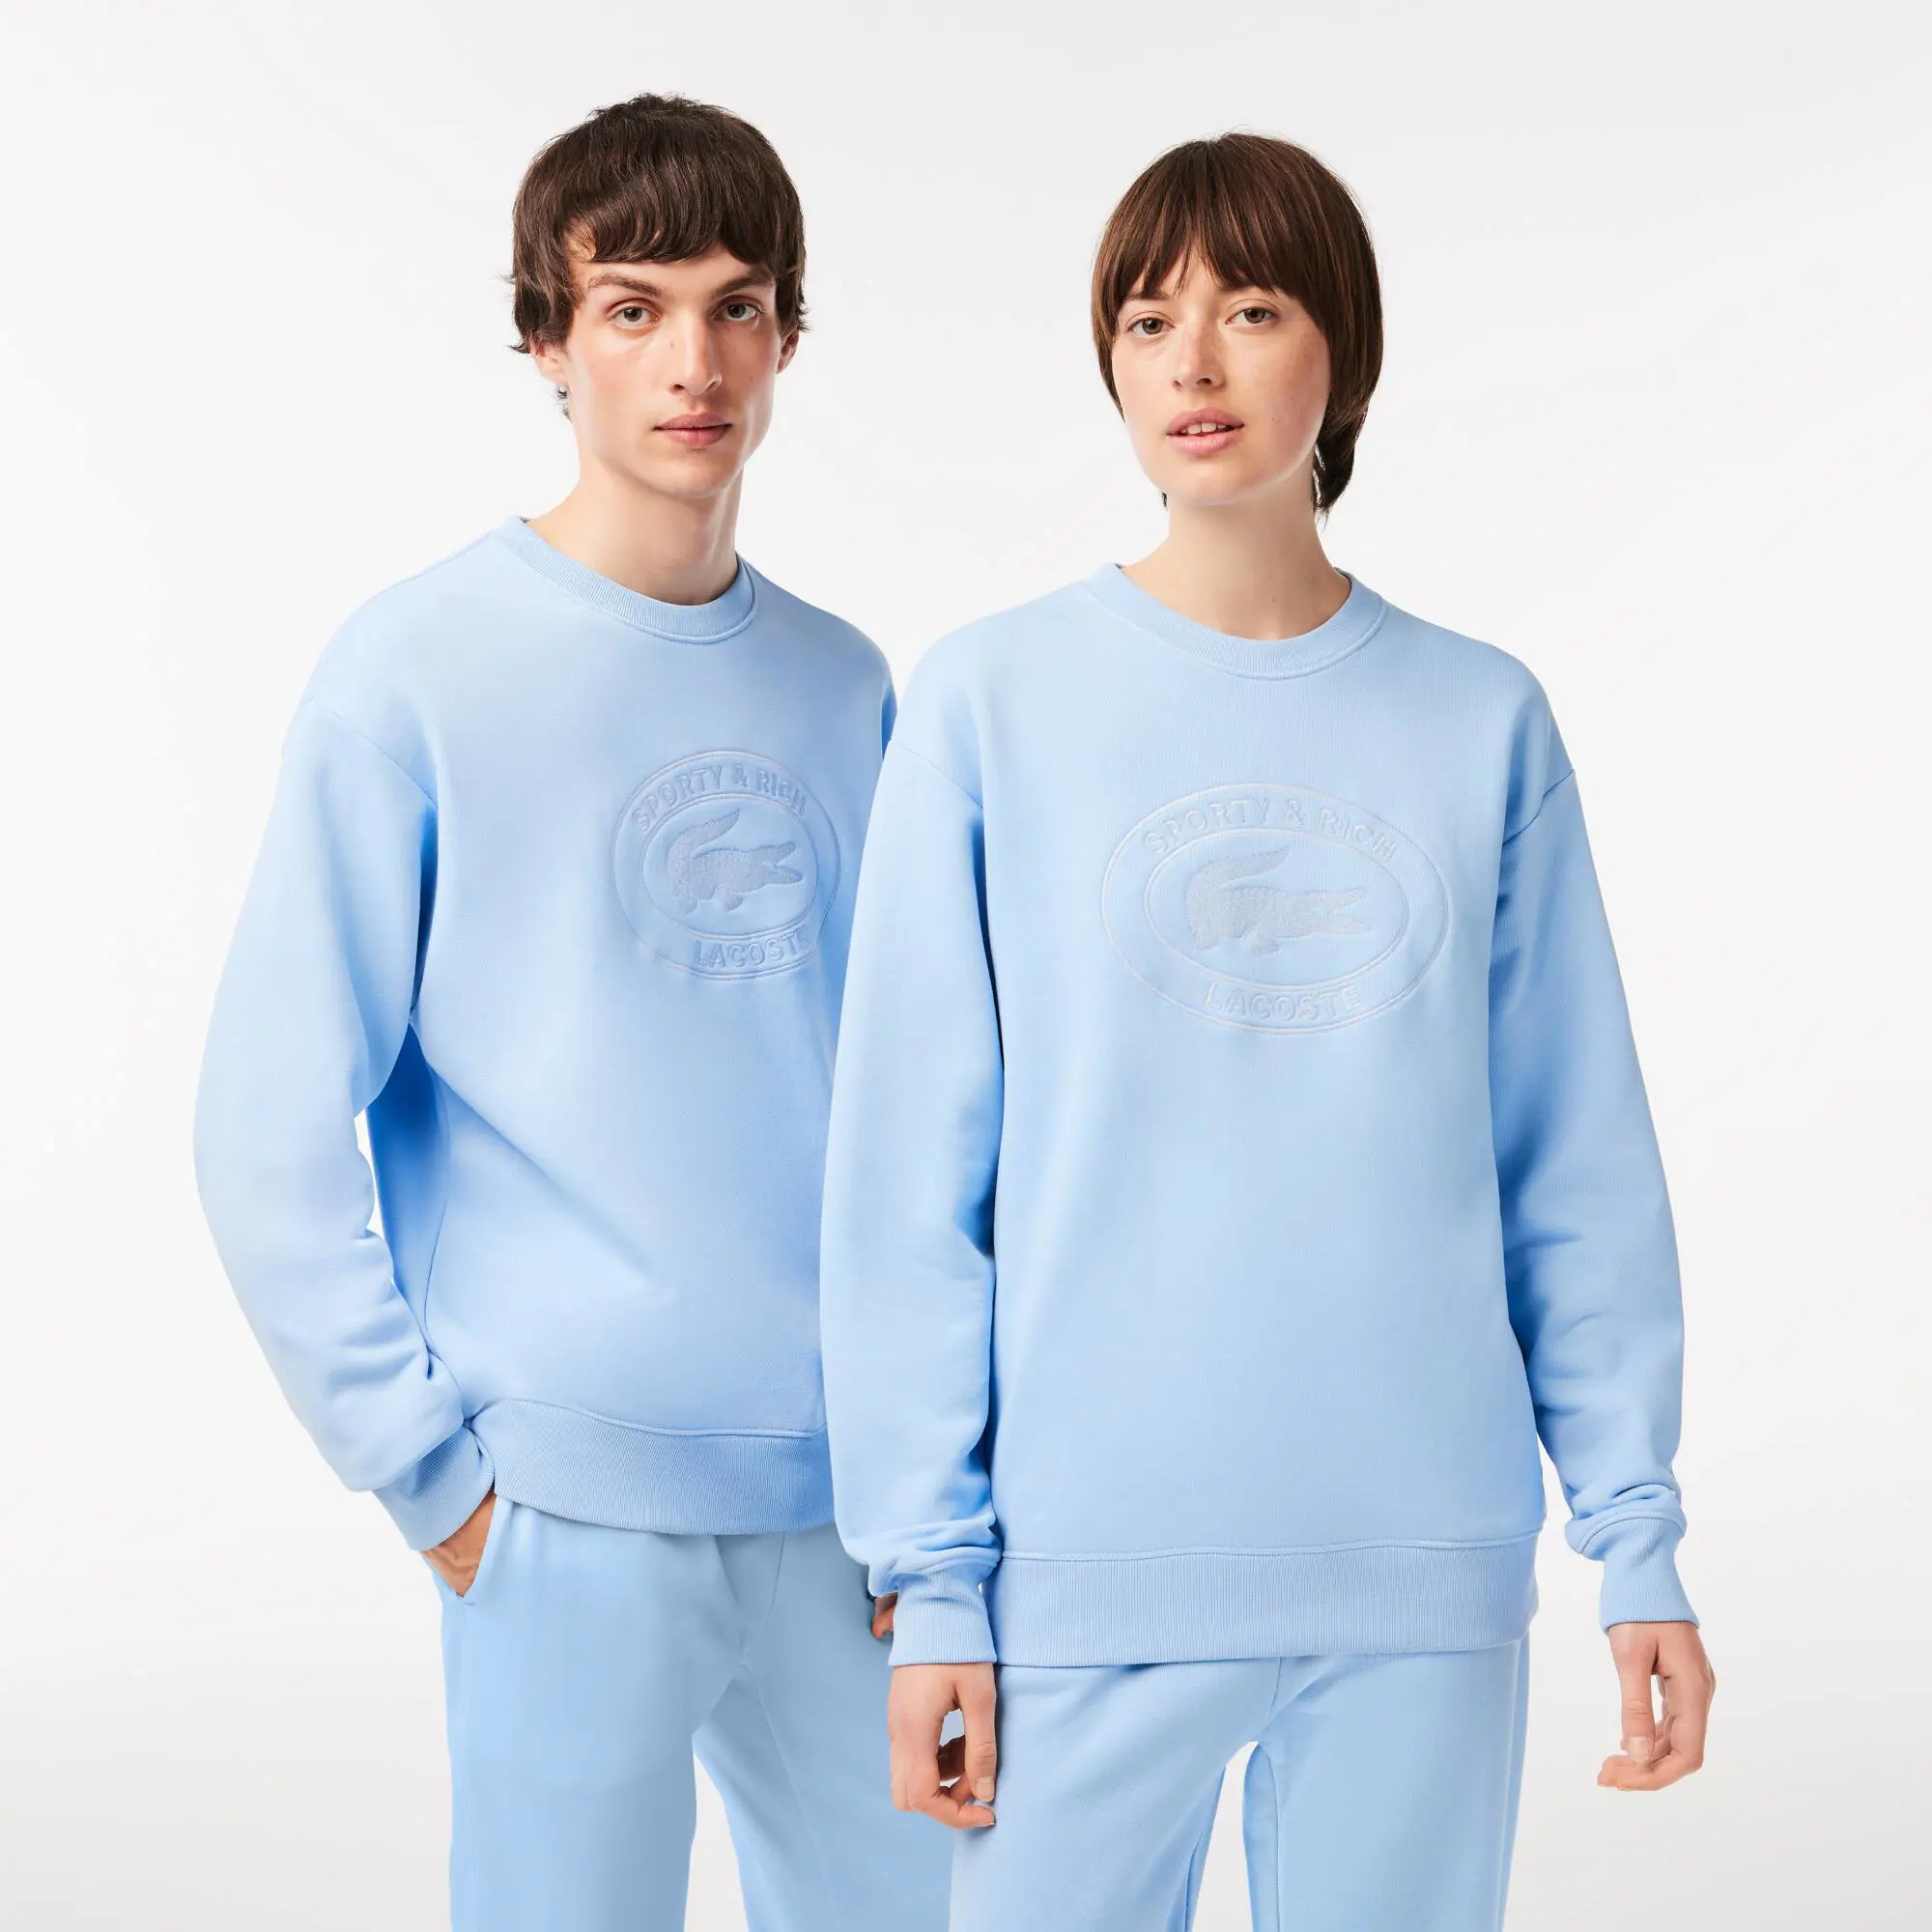 Lacoste Sweatshirt com bordado Lacoste x Sporty & Rich. 1